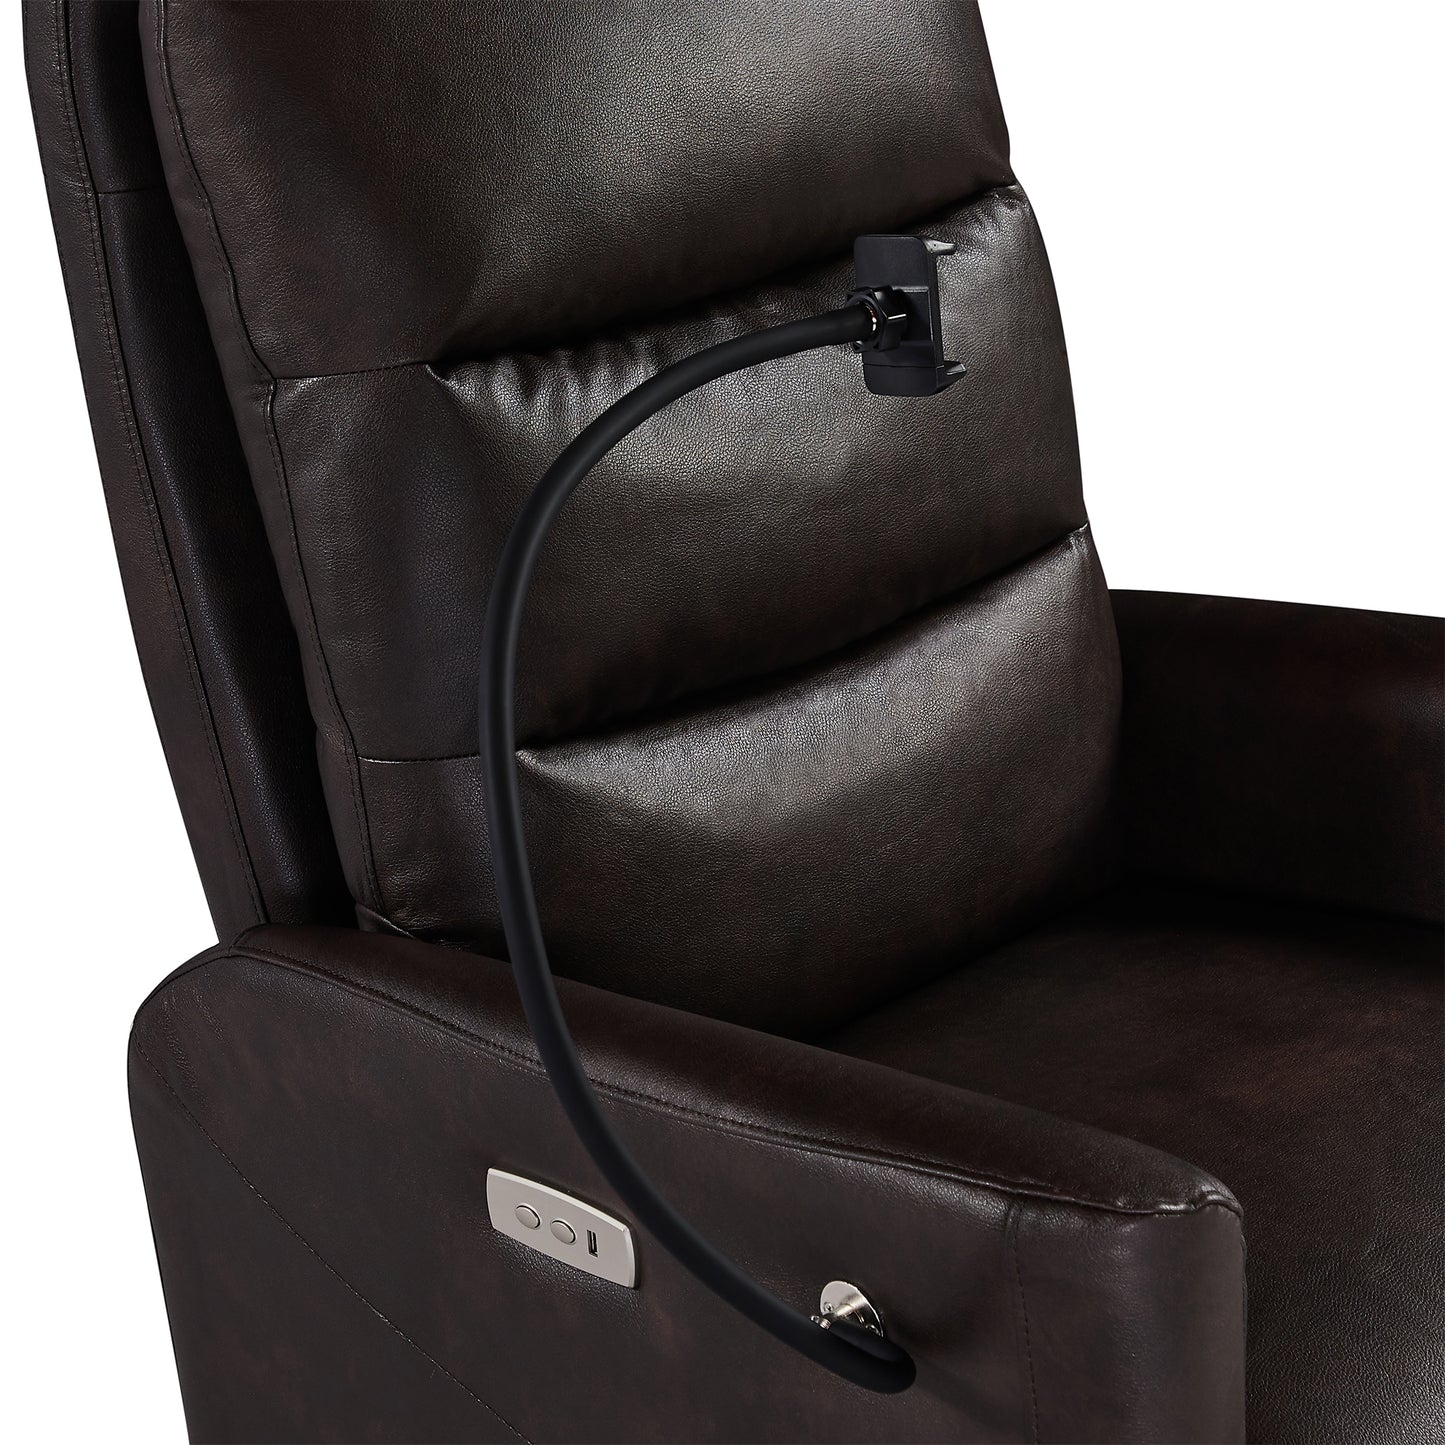 Gravitron Zero-G Recliner Chair